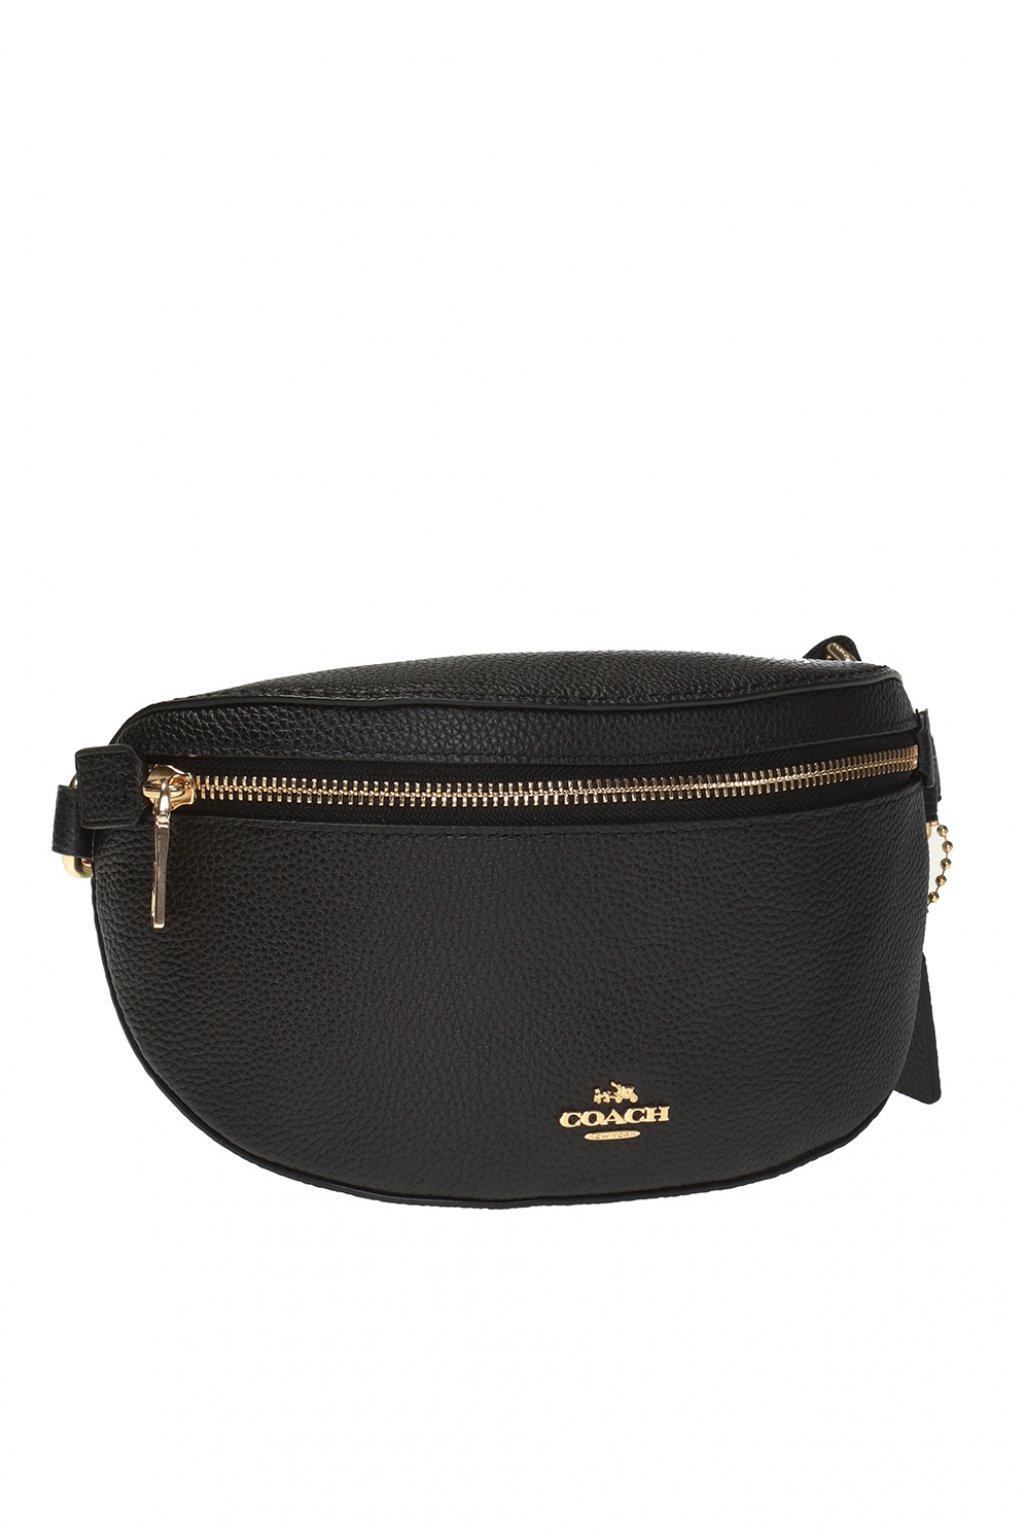 COACH Leather Belt Bag in Black/Gold (Black) - Save 10% | Lyst